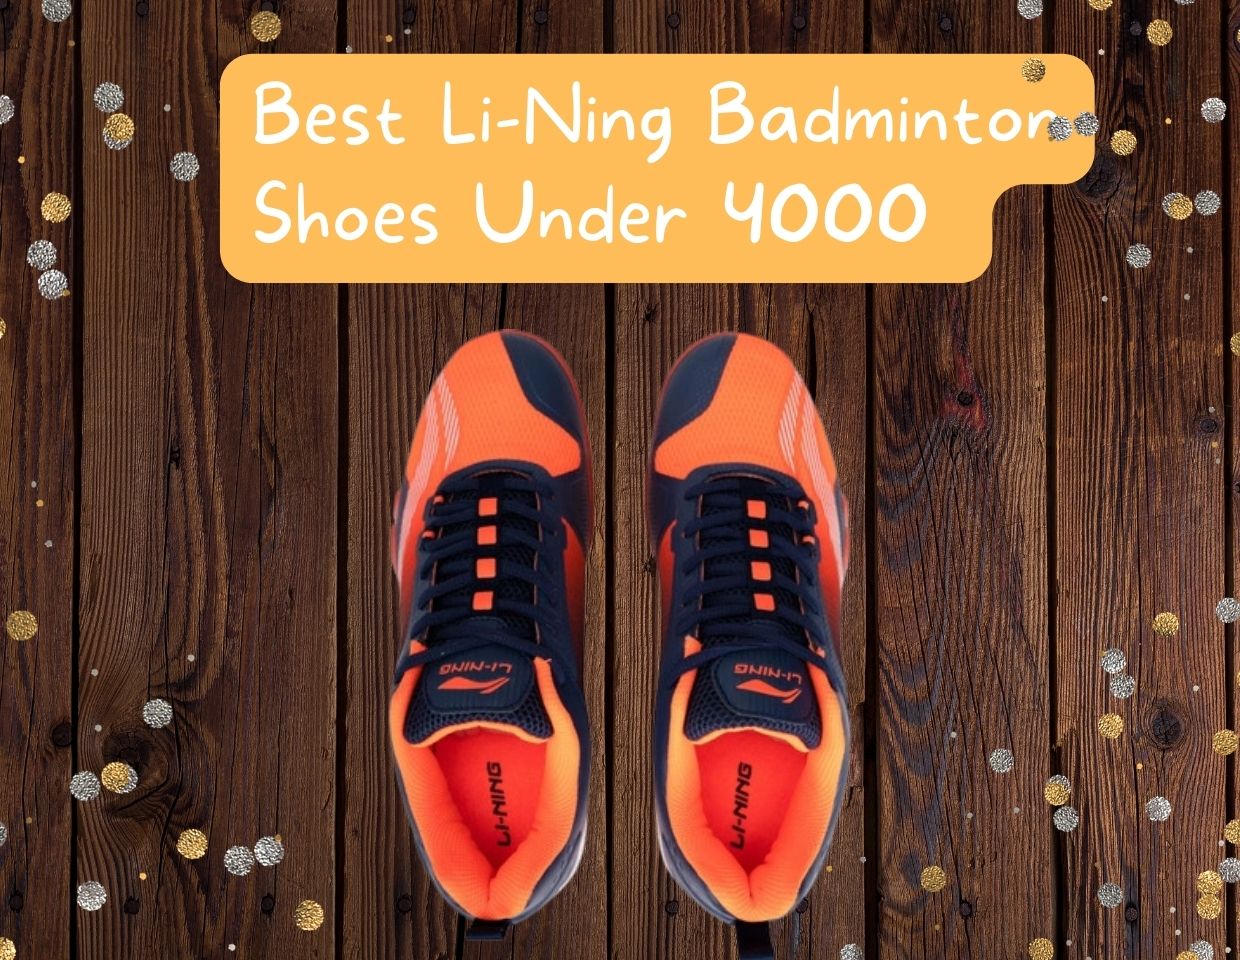 Best Li-Ning Badminton Shoes Under 4000 Reviews